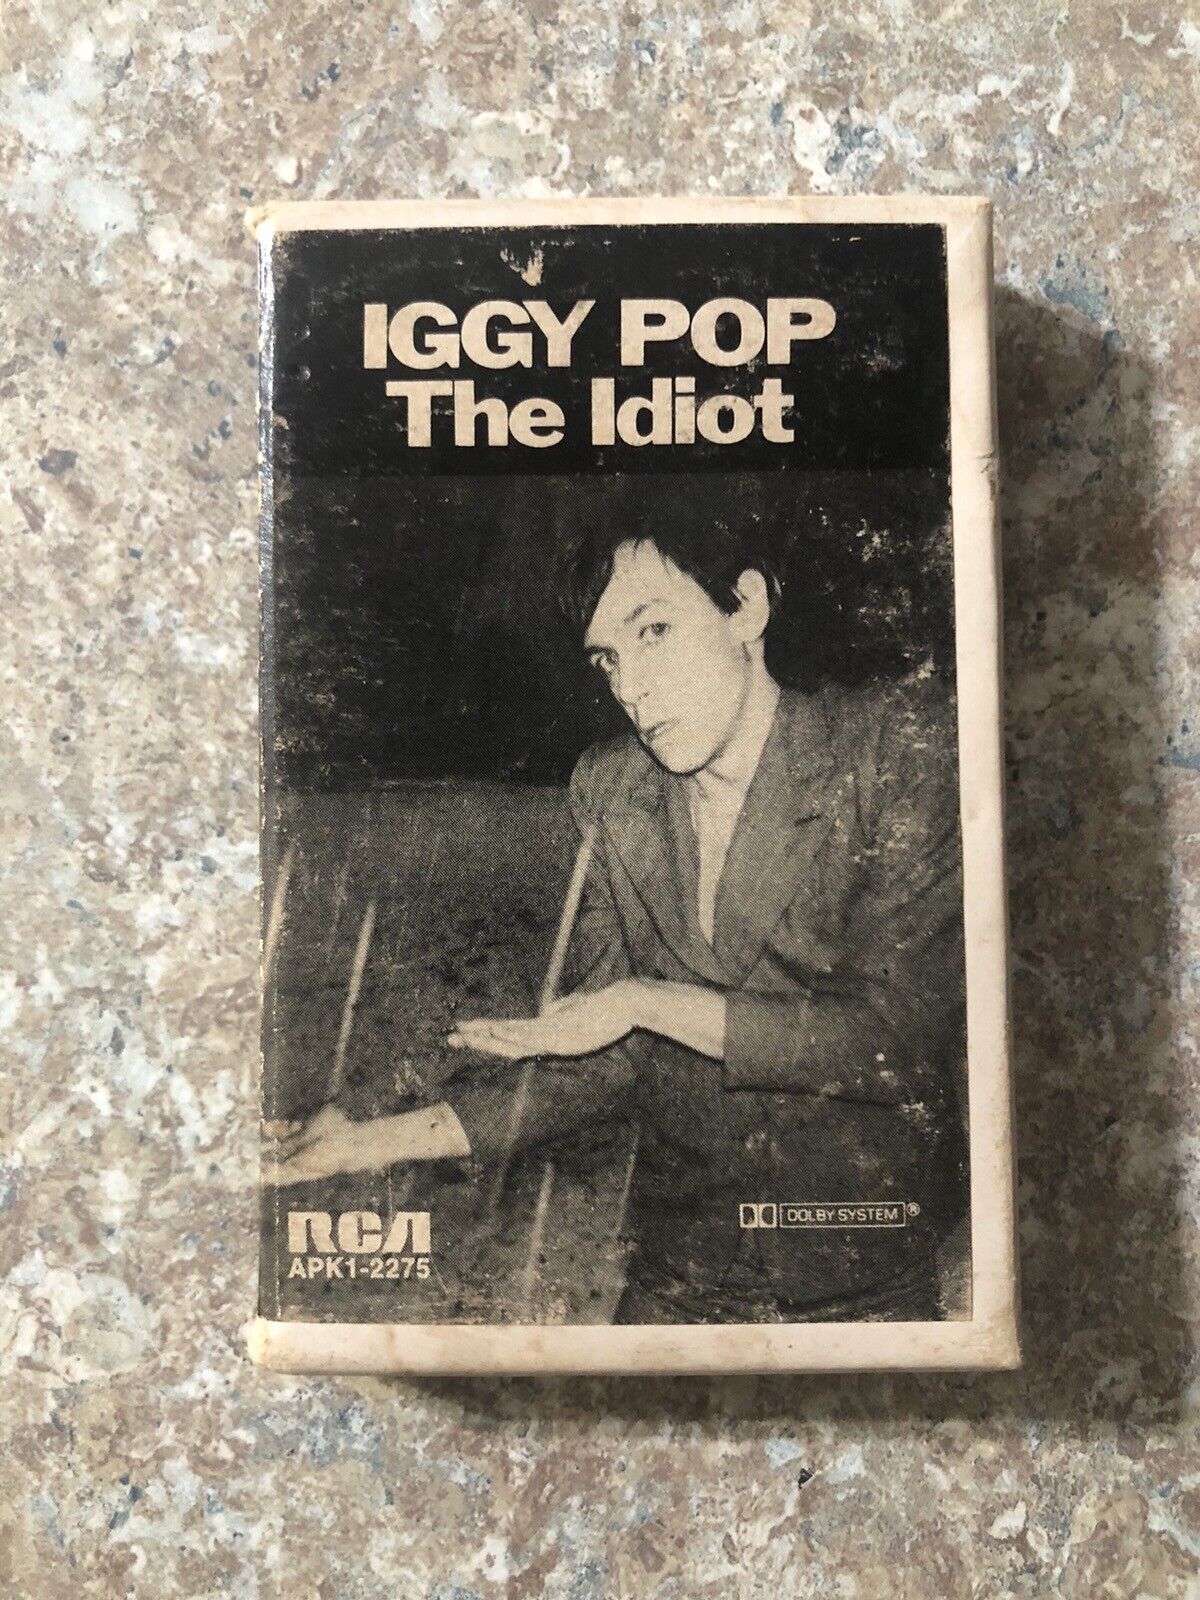 Iggy Pop – The Idiot Cassette Tape VERY RARE PAPER CASE 1977 RCA APK1-2275